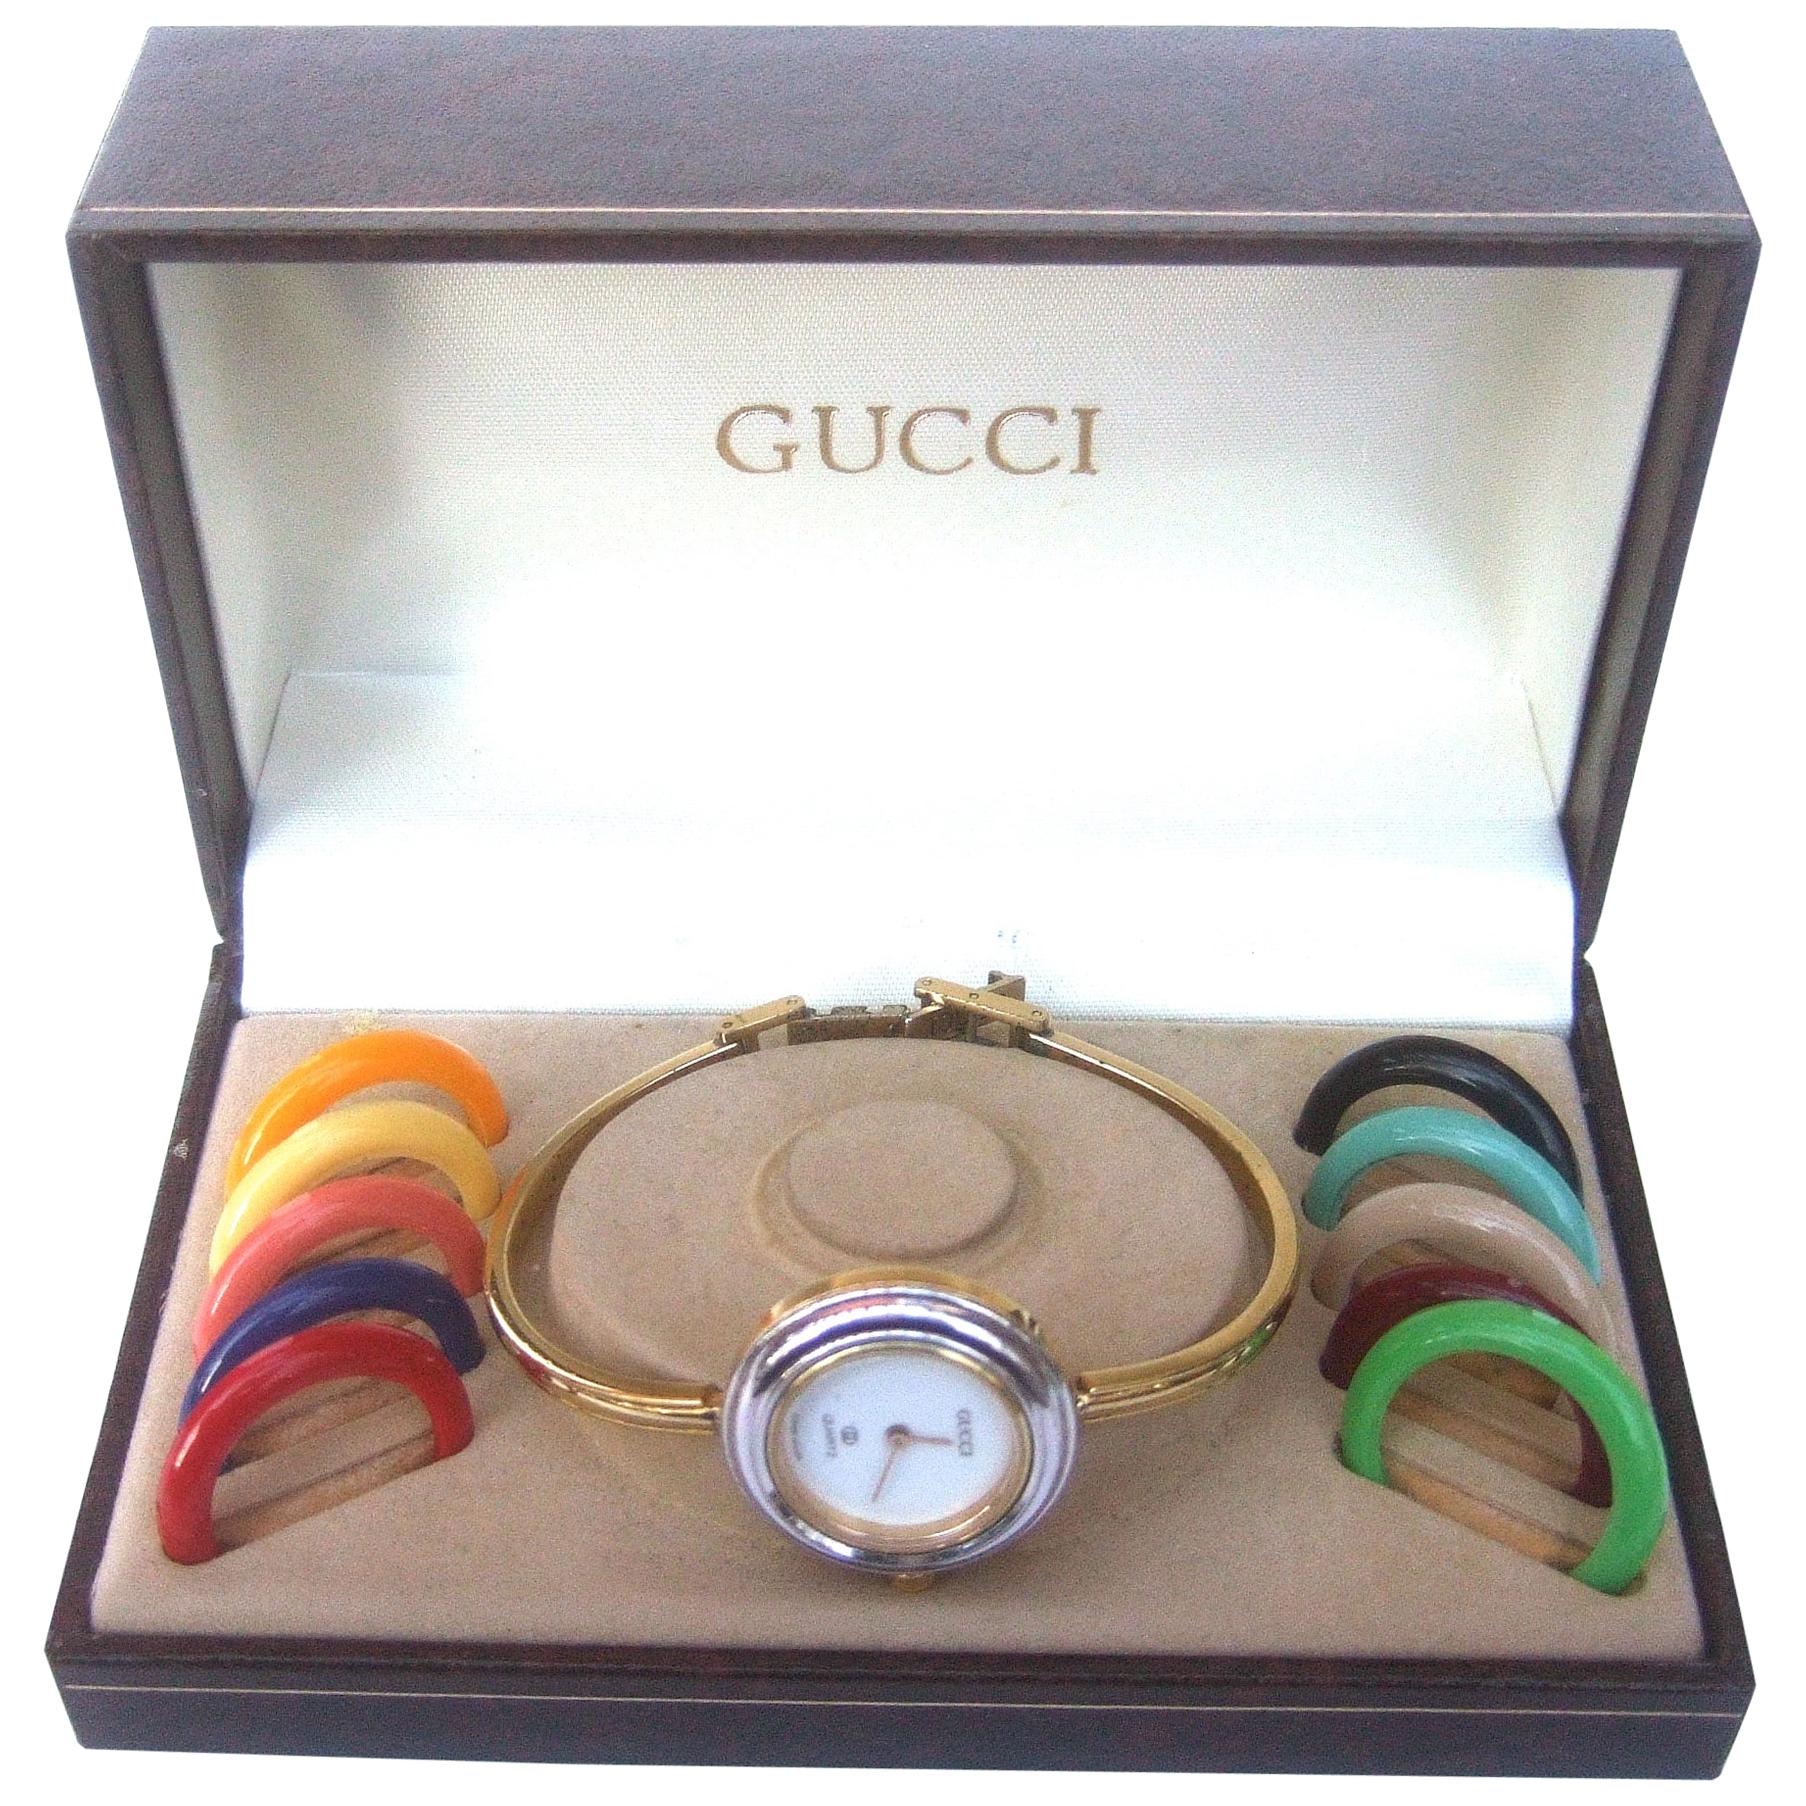 Gucci Womens Wrist Watch in Original Gucci Presentation Box c 1980s